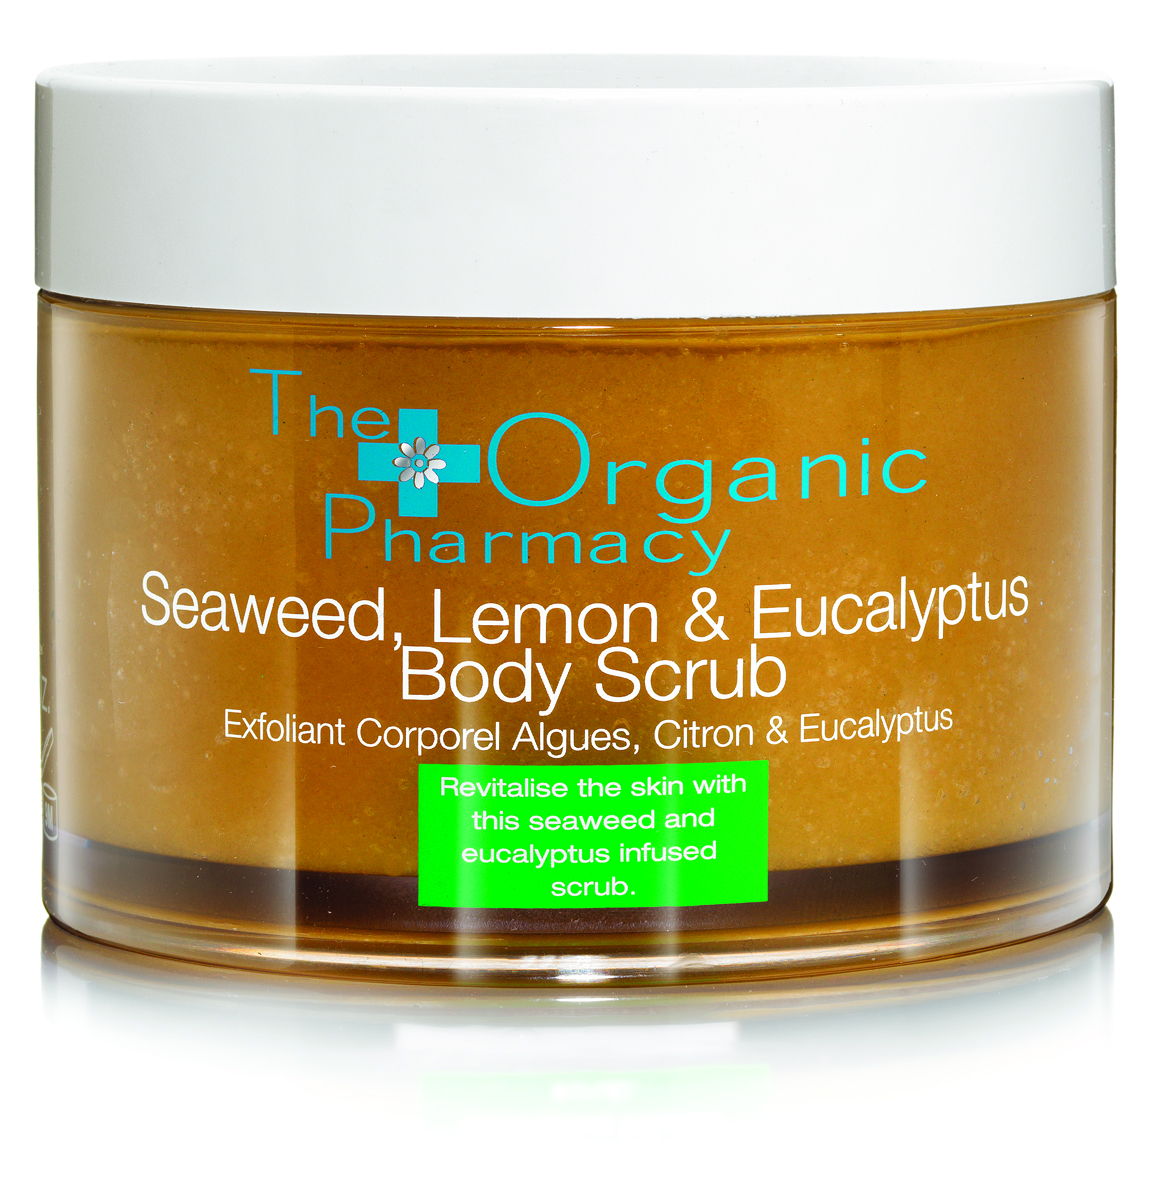 Seaweed lemon & eucalyptus body scrub